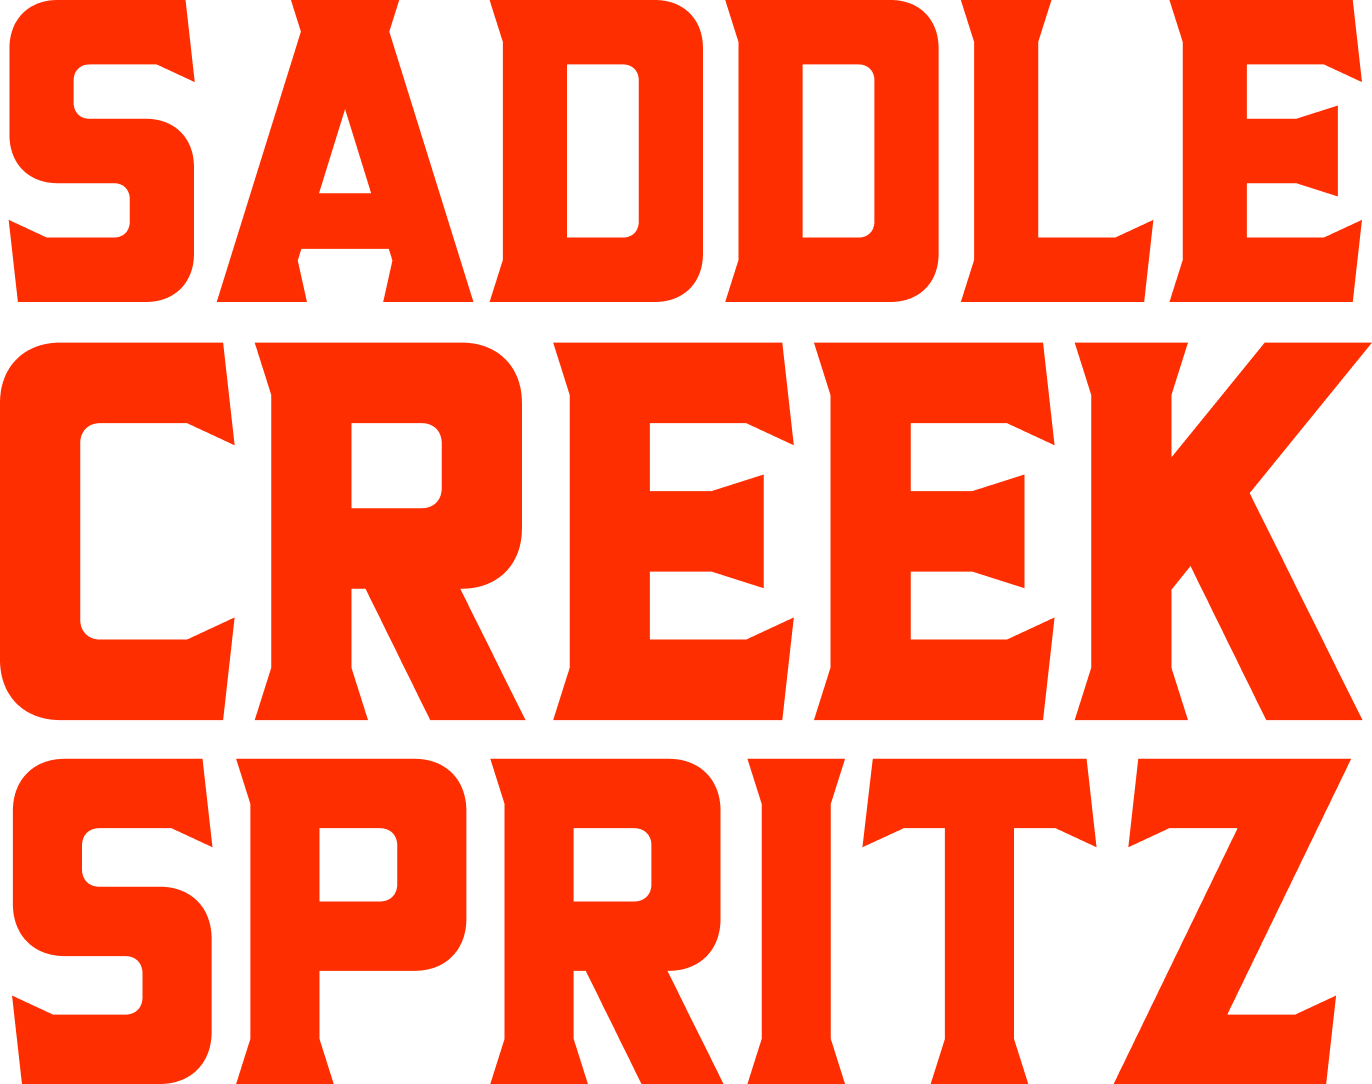 Saddle Creek Spritz Sparkling Spirits can